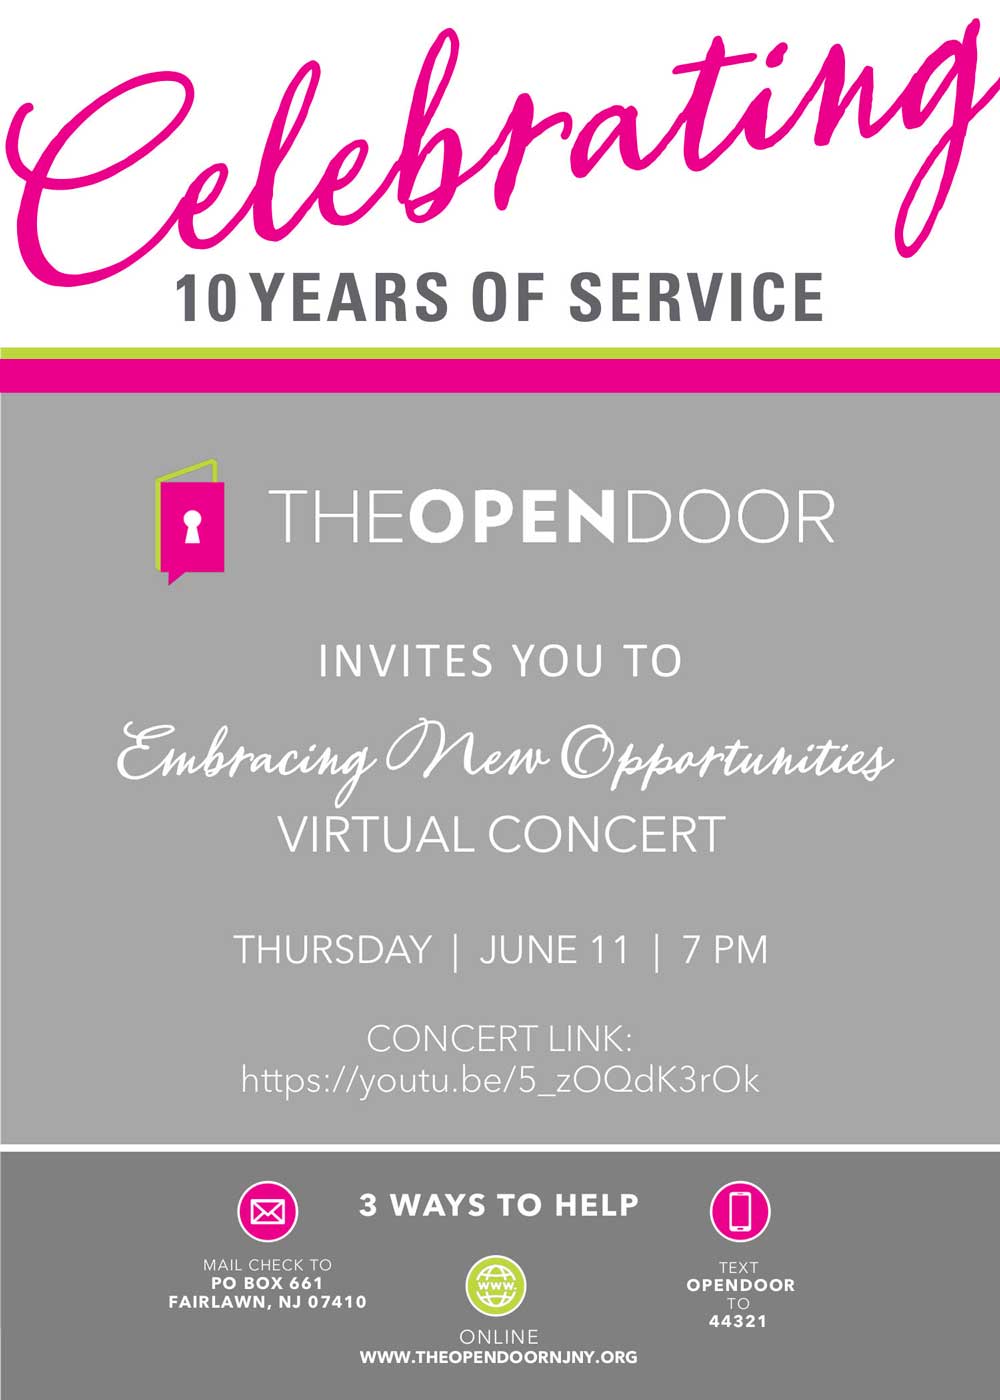 The Open Door poster for their virtual concert